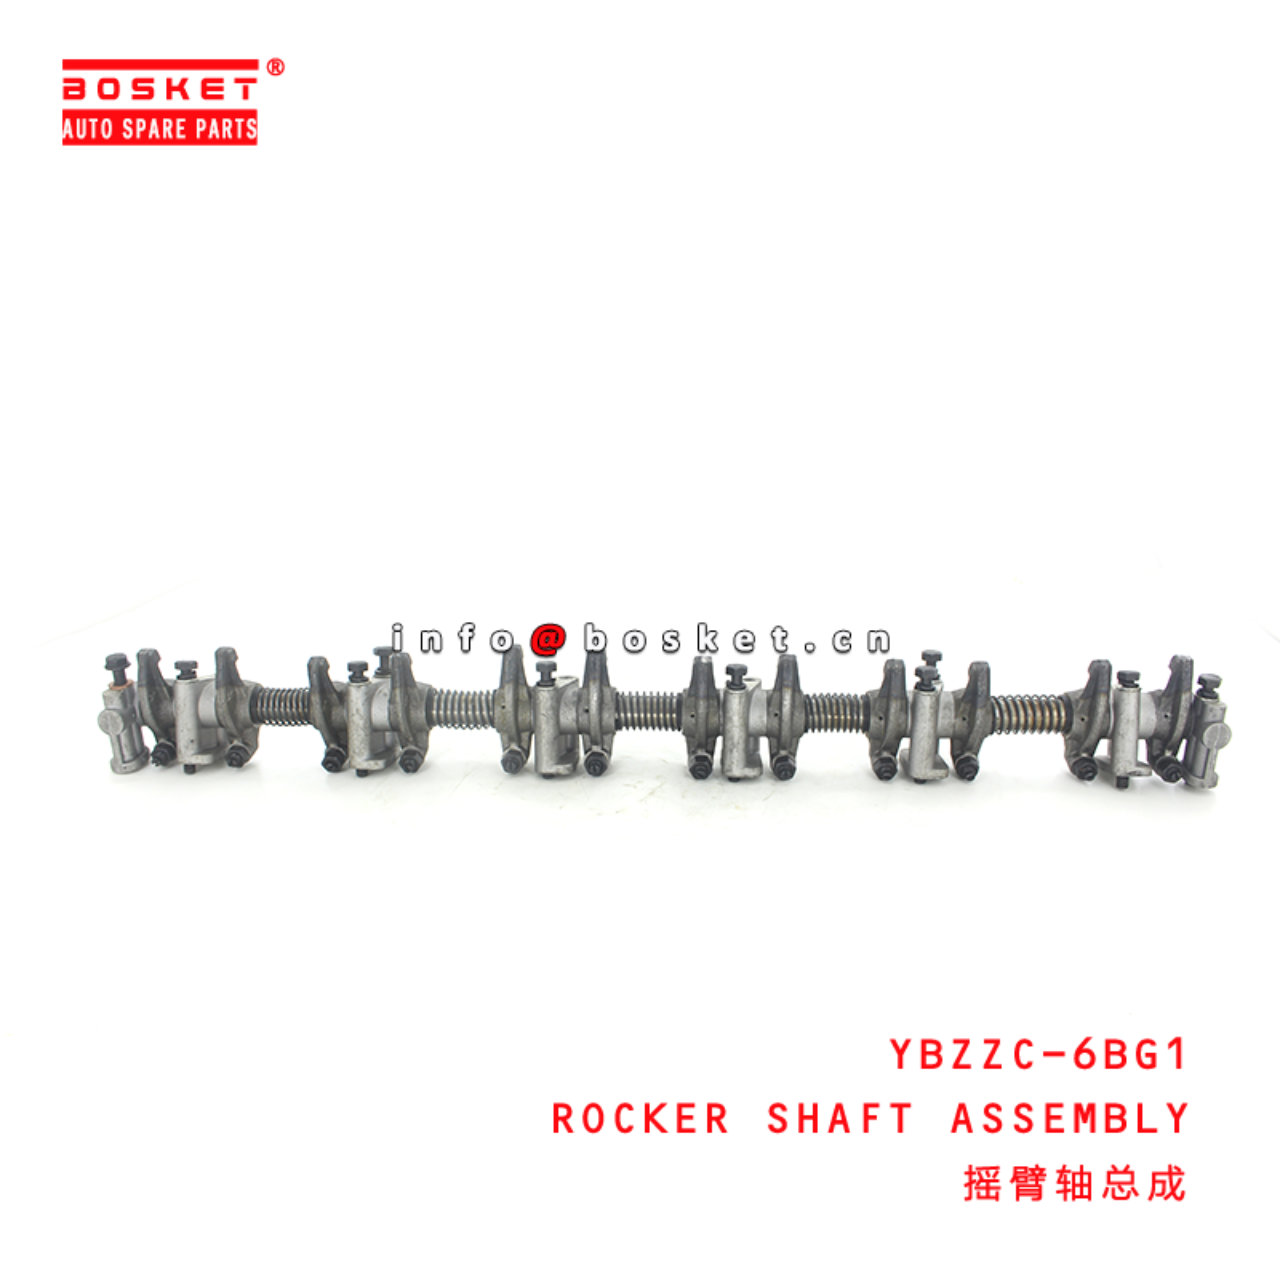  YBZZC-6BG1 Rocker Shaft Assembly Suitable for ISUZU 6BG1